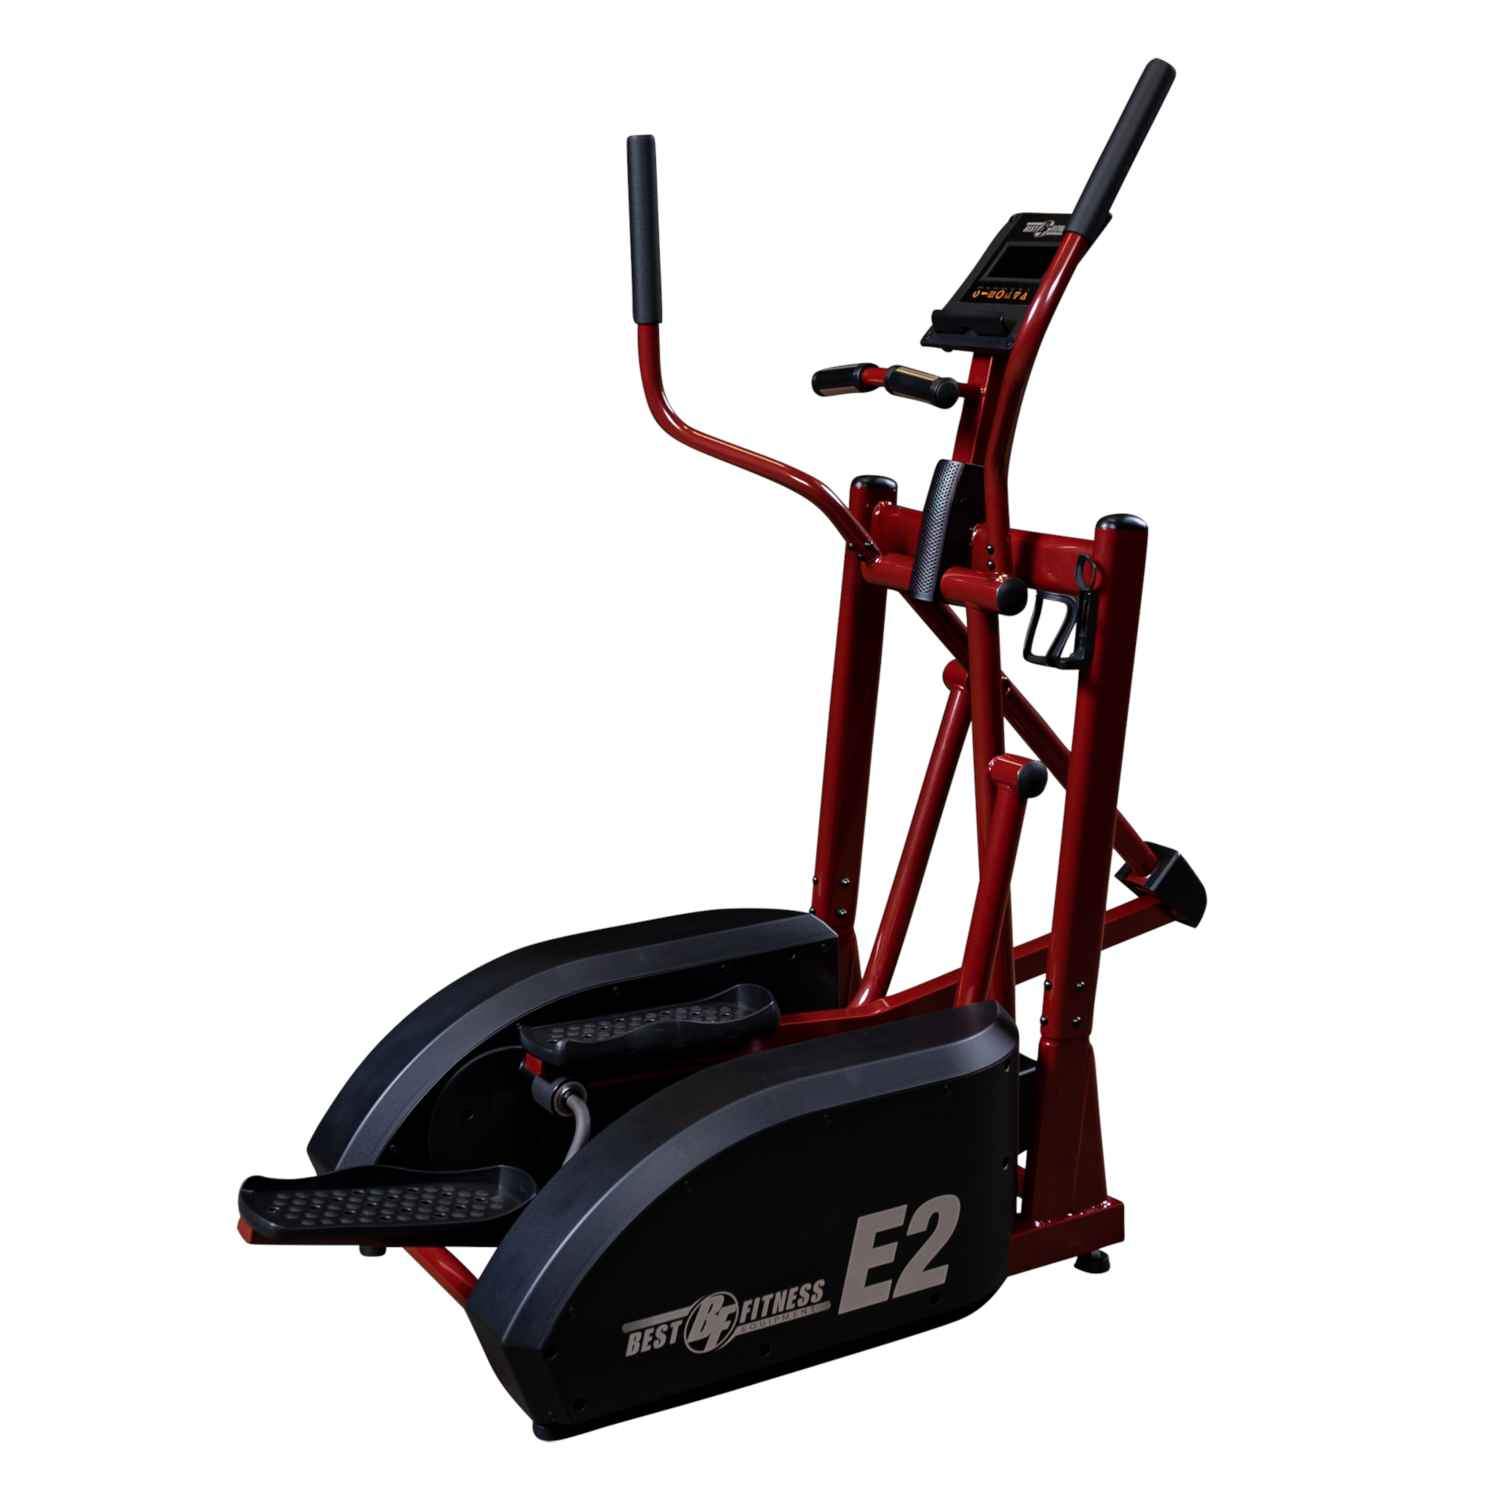 Best Fitness BFE2 Center Drive Elliptical Trainer elliptical Best Fitness 